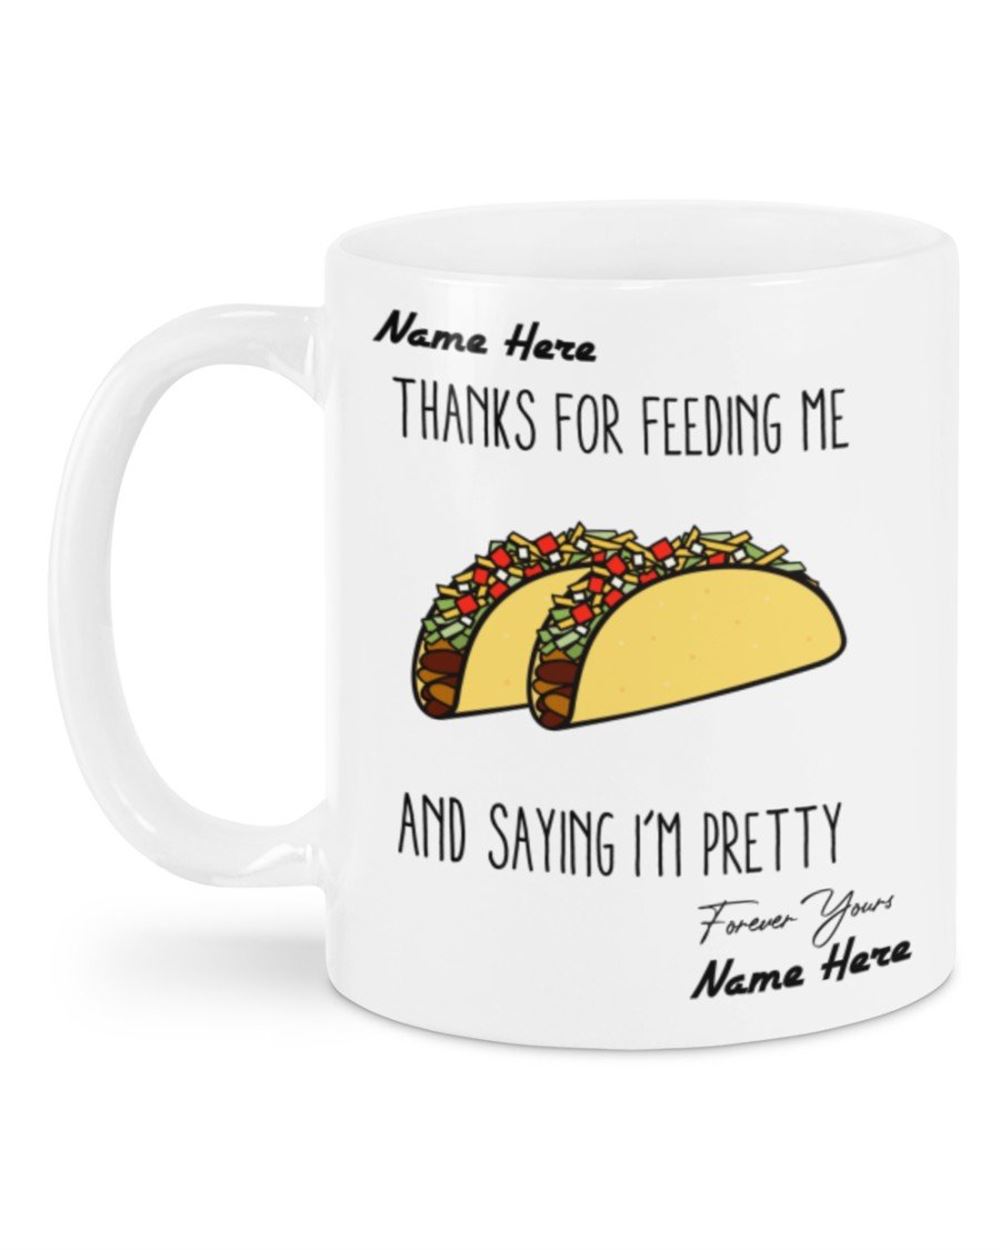 Personalized Mug Funny Mug Thanks For Feeding Me Mug